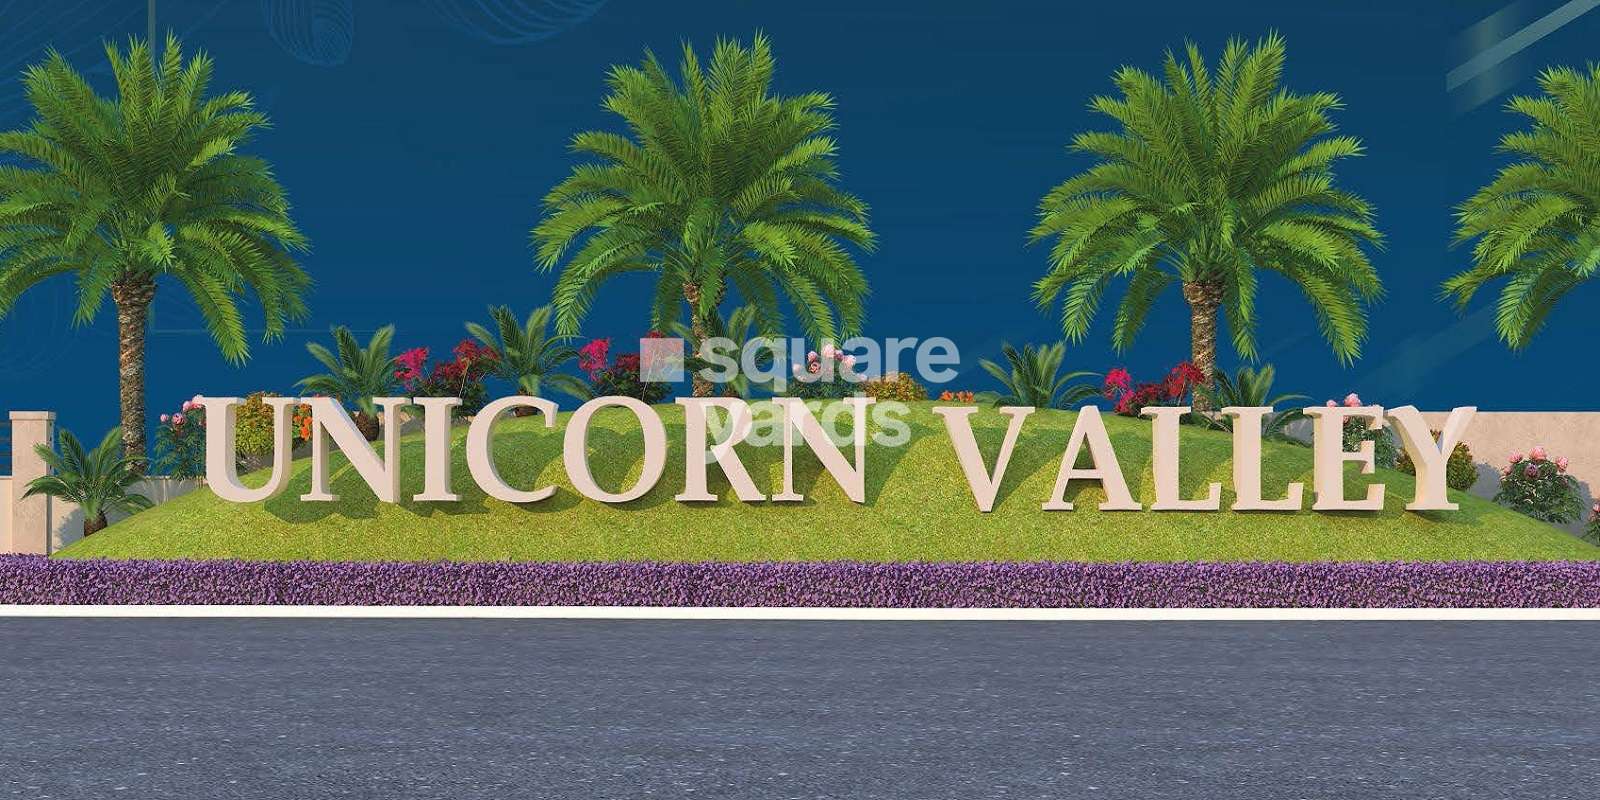 Unicorn Valley Cover Image